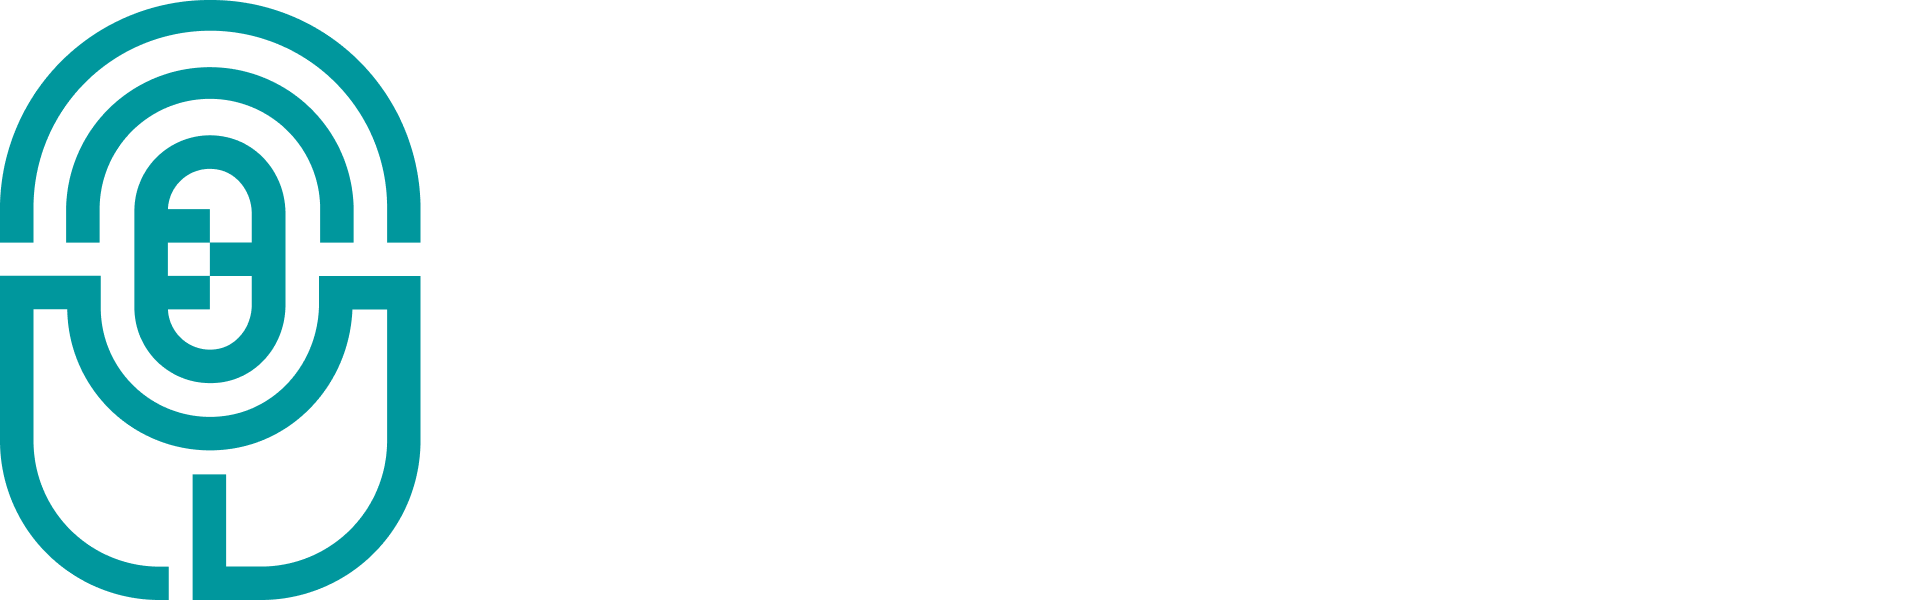 PodPromos.net logo